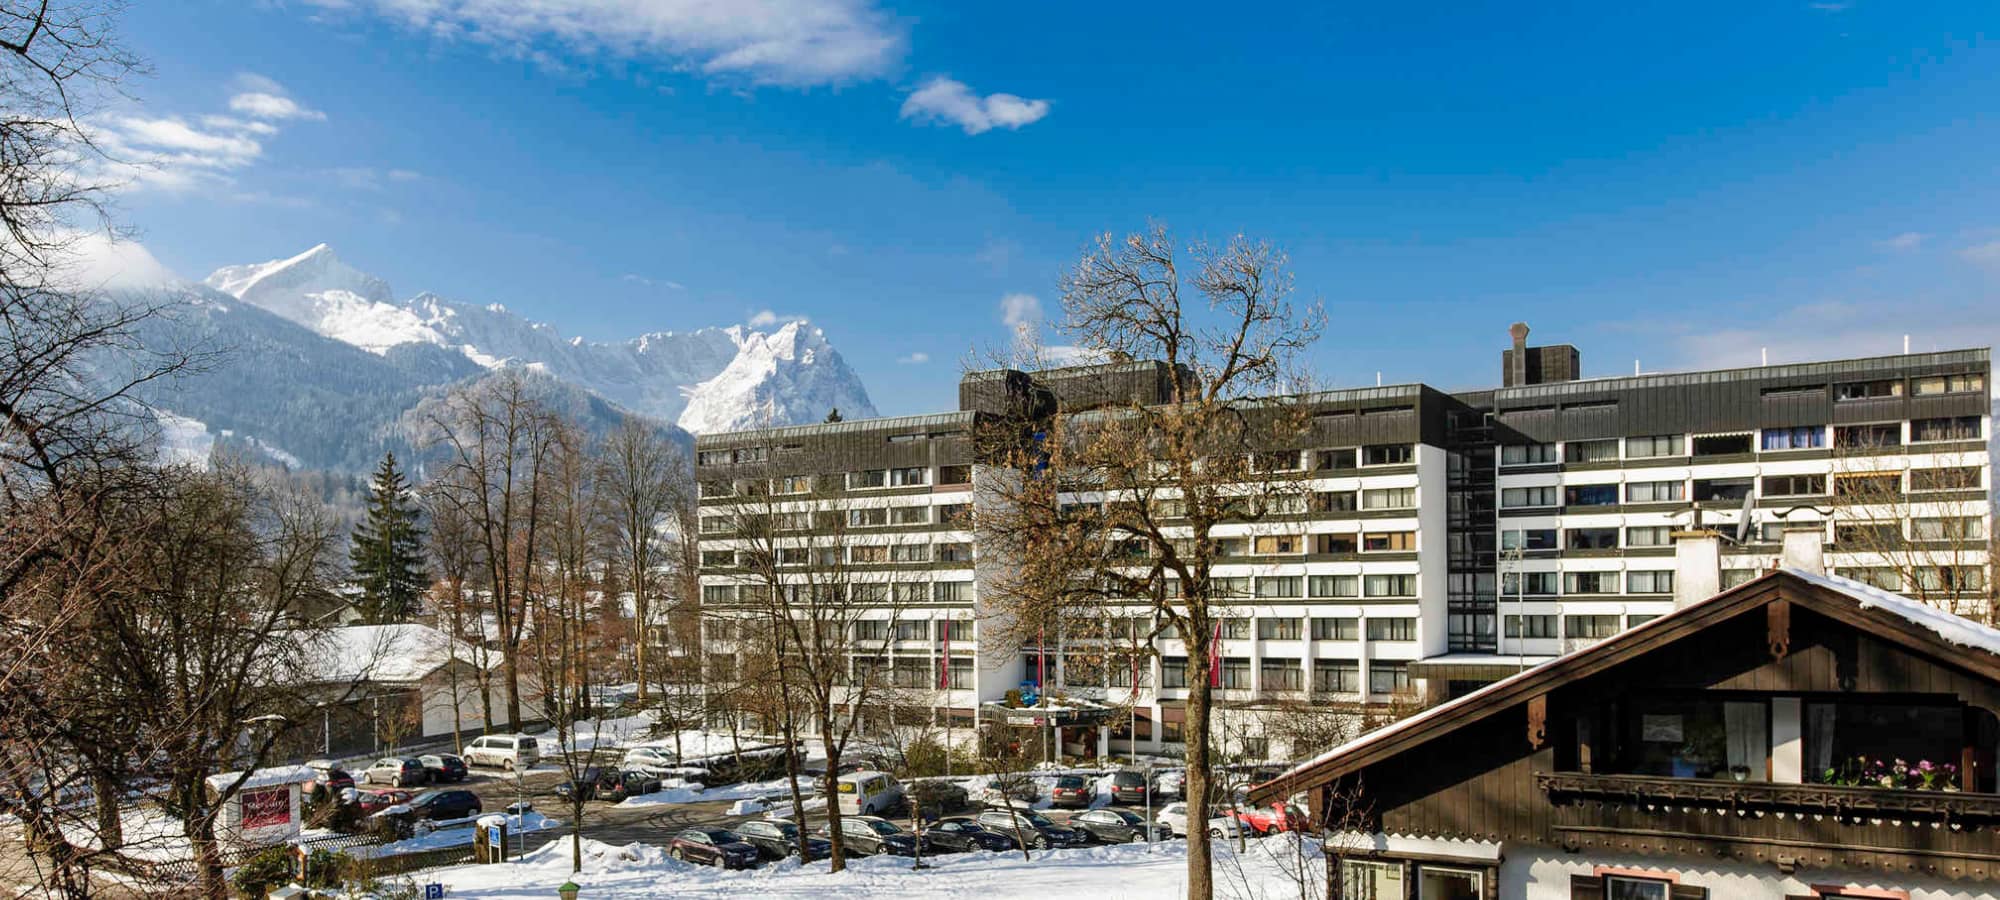 Mercure Hotel Garmisch Partenkirchen - Garmisch-Partenkirchen